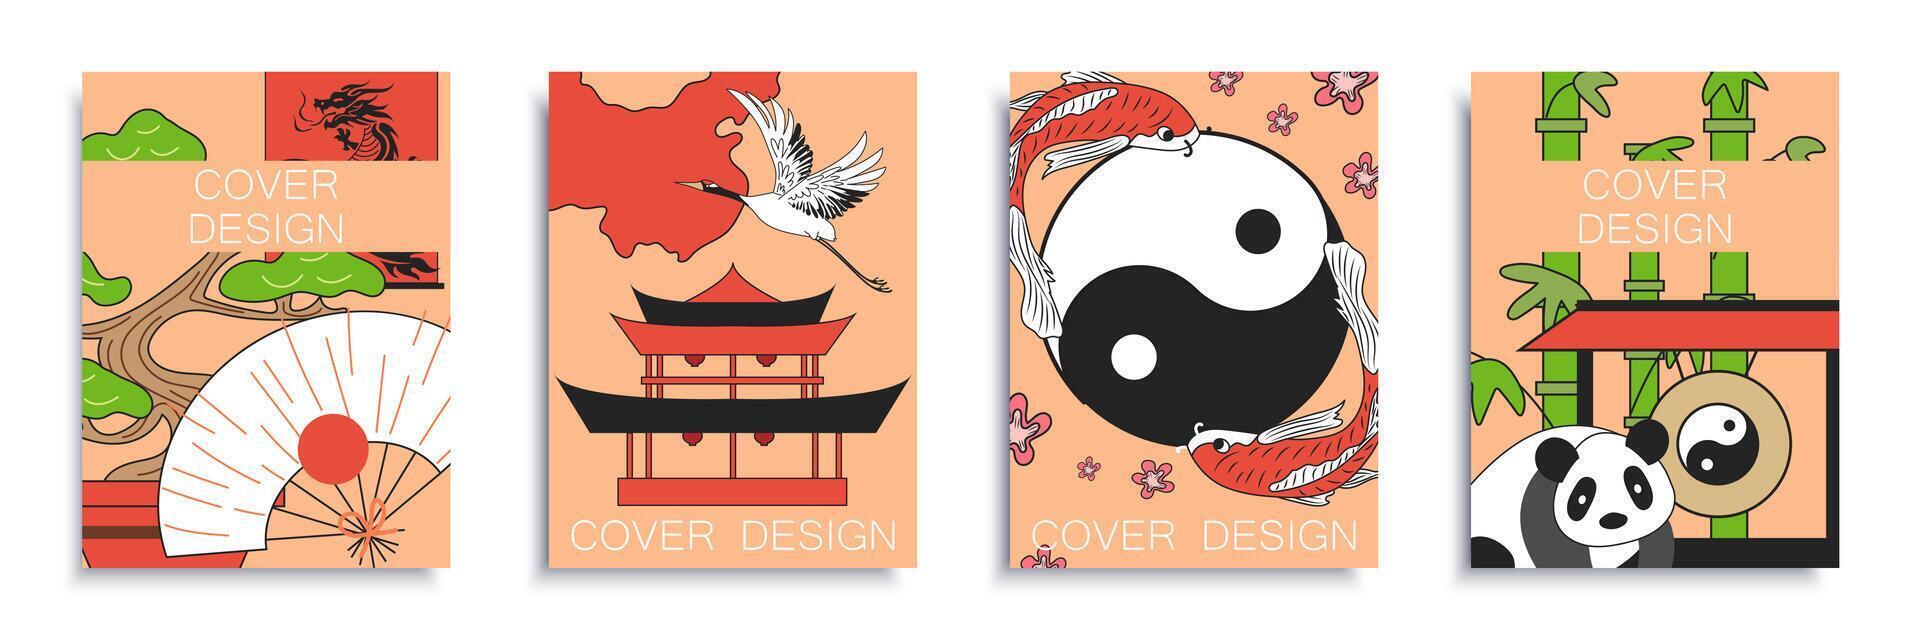 China Hoes brochure reeks in vlak ontwerp. poster Sjablonen met Chinese traditioneel symbolen, bonsai boom, fan, draak, pagode, kraan, yin en yang teken, koi karper, panda en bamboe. vector illustratie.